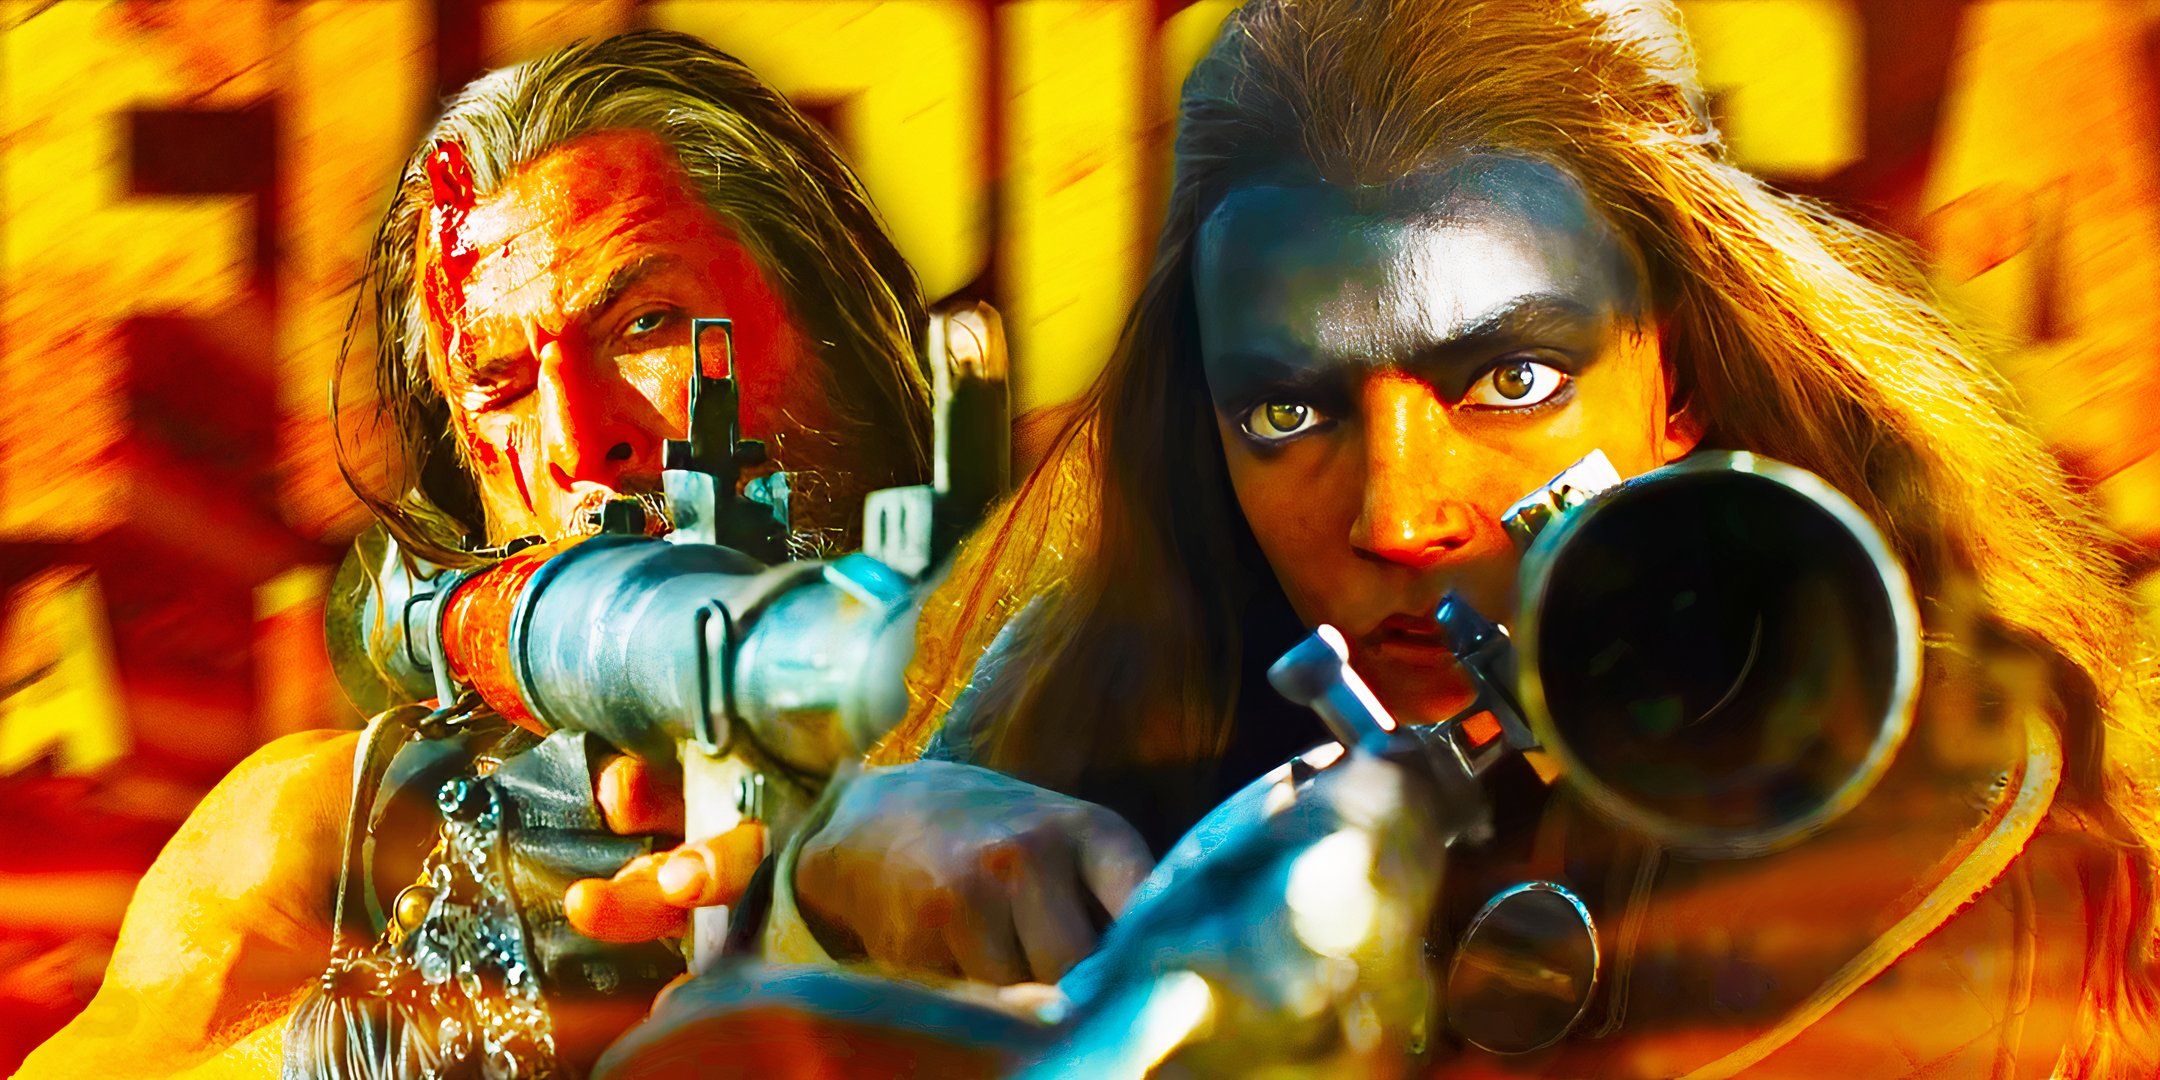 Dementus (Chris Hemsworth) aiming a rocket launcher and Furiosa (Anya Taylor-Joy) reloading a sniper rifle in Furiosa: A Mad Max Saga